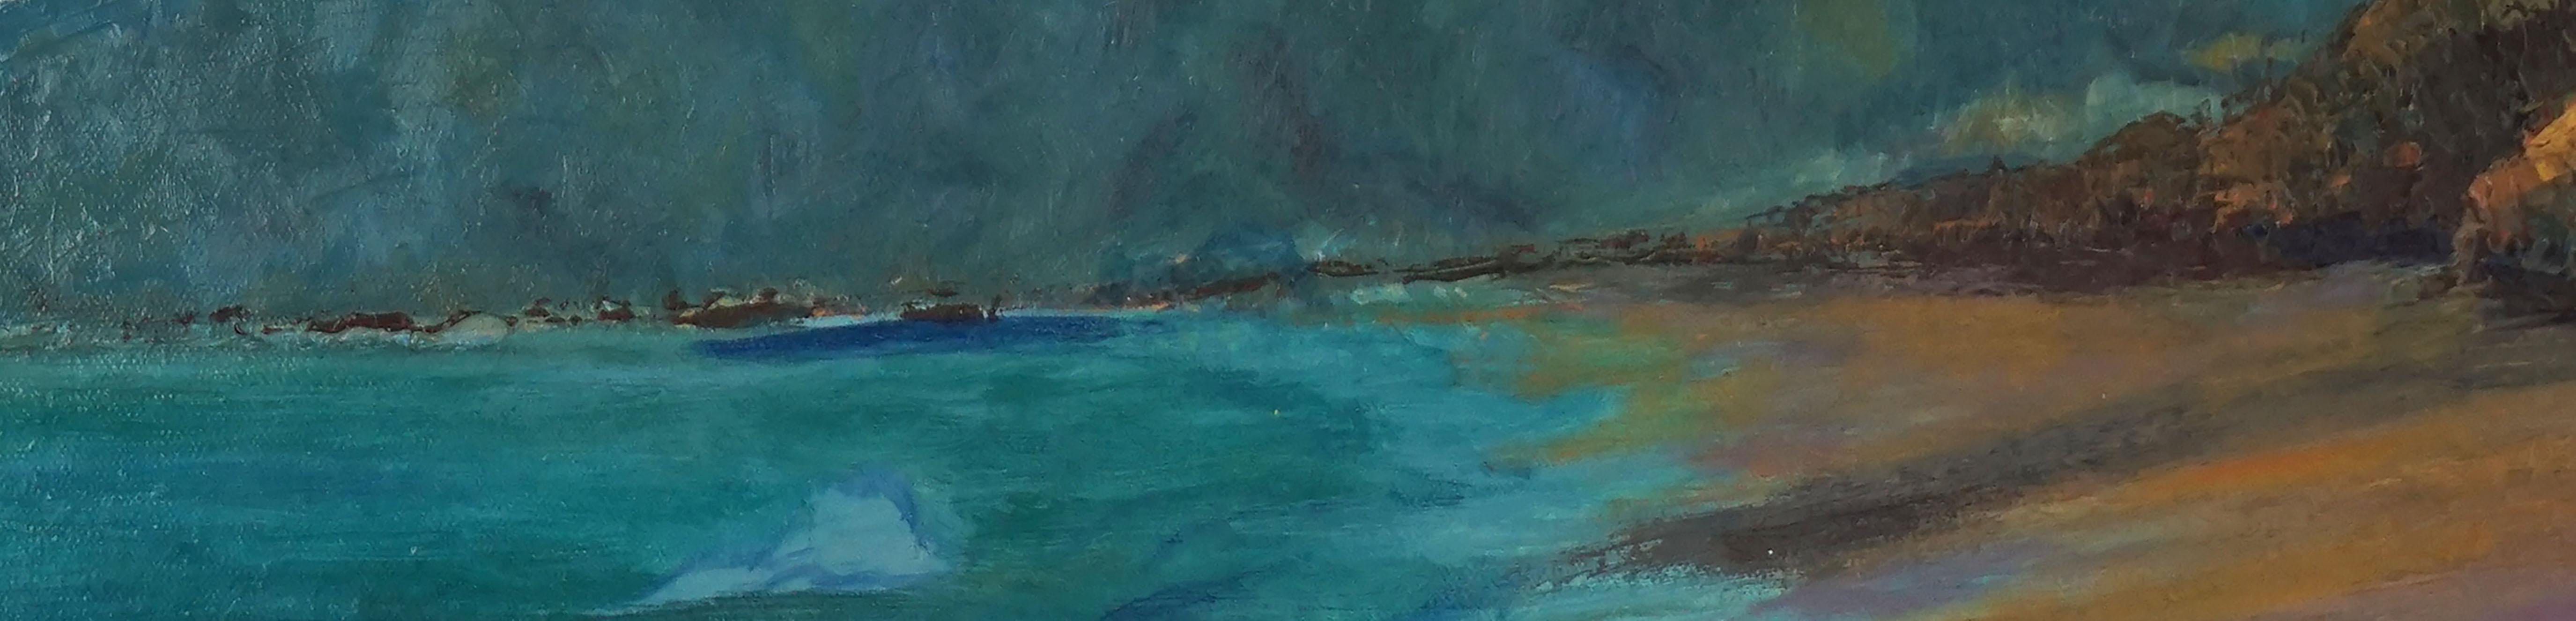 Big Sur Coastline Landscape  - American Impressionist Painting by Unknown